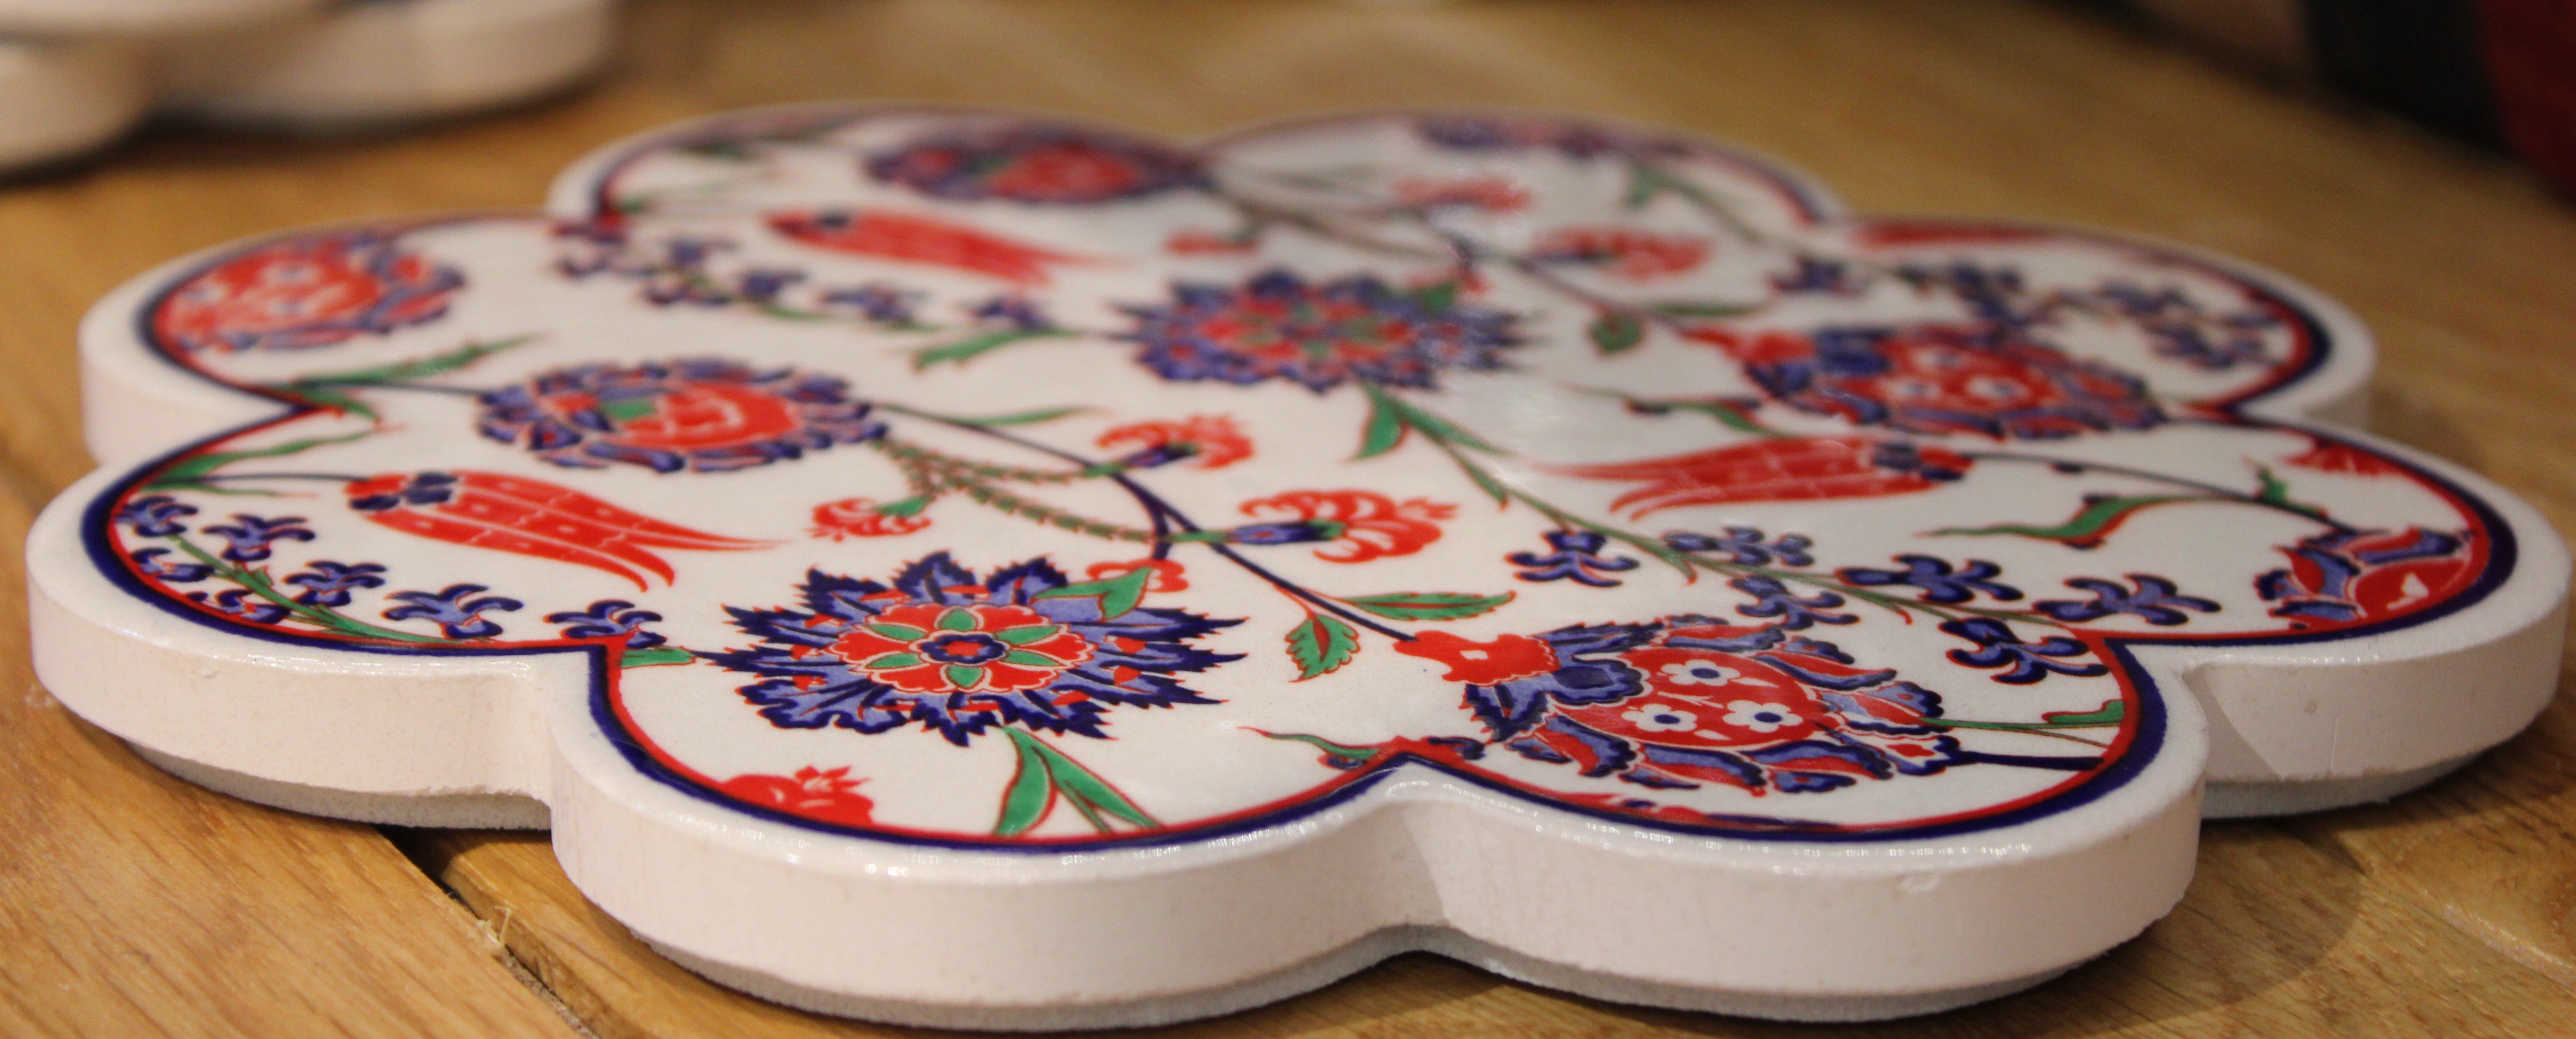 Handmade Ceramic Trivet/Tile Collection